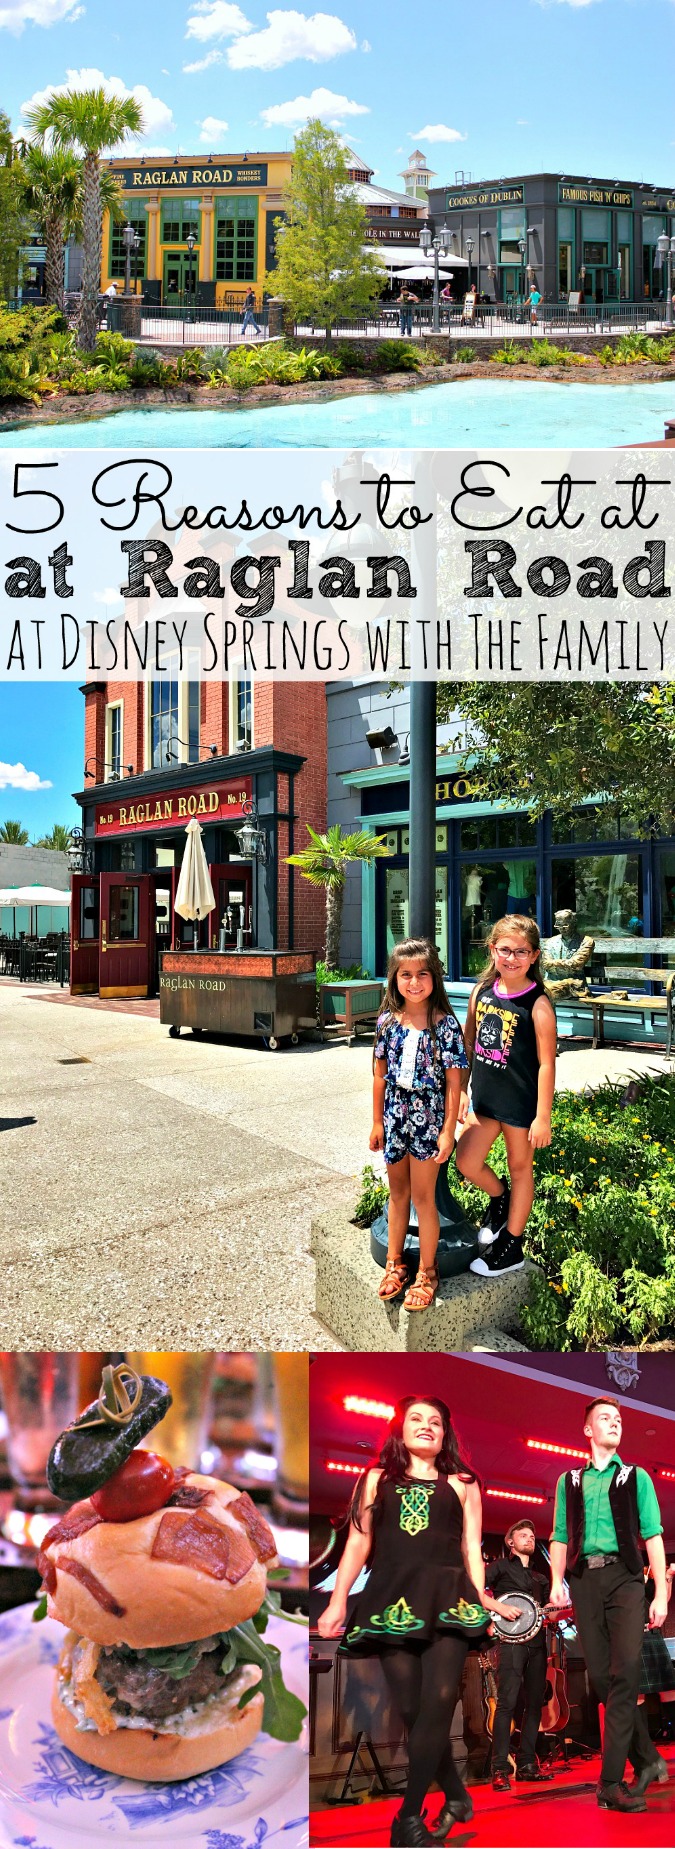 5 Reasons to Eat at Raglan Road at Disney Springs with the Family